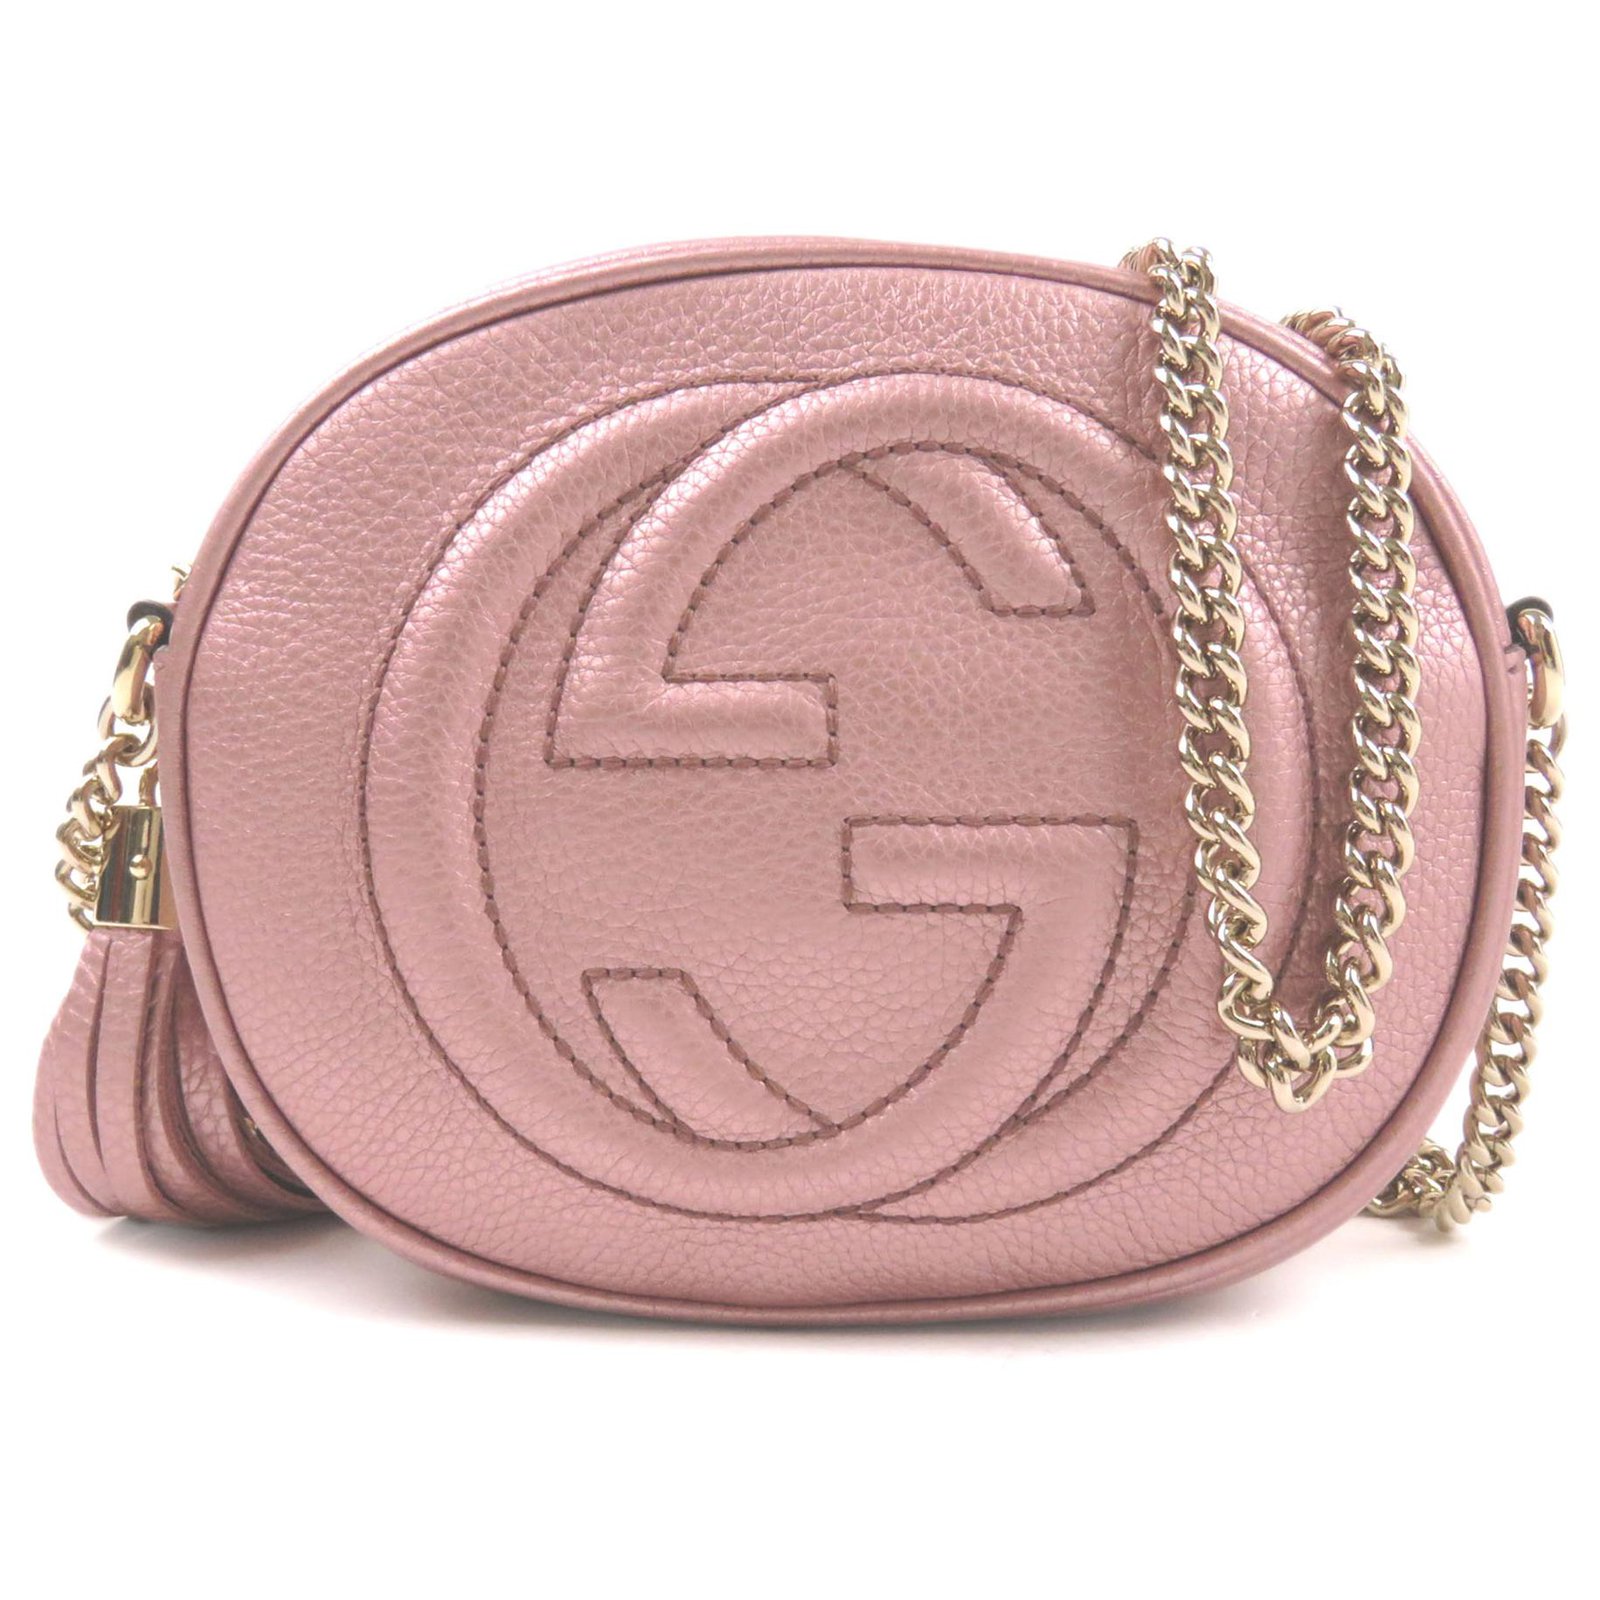 Gucci Soho Pink | Shop